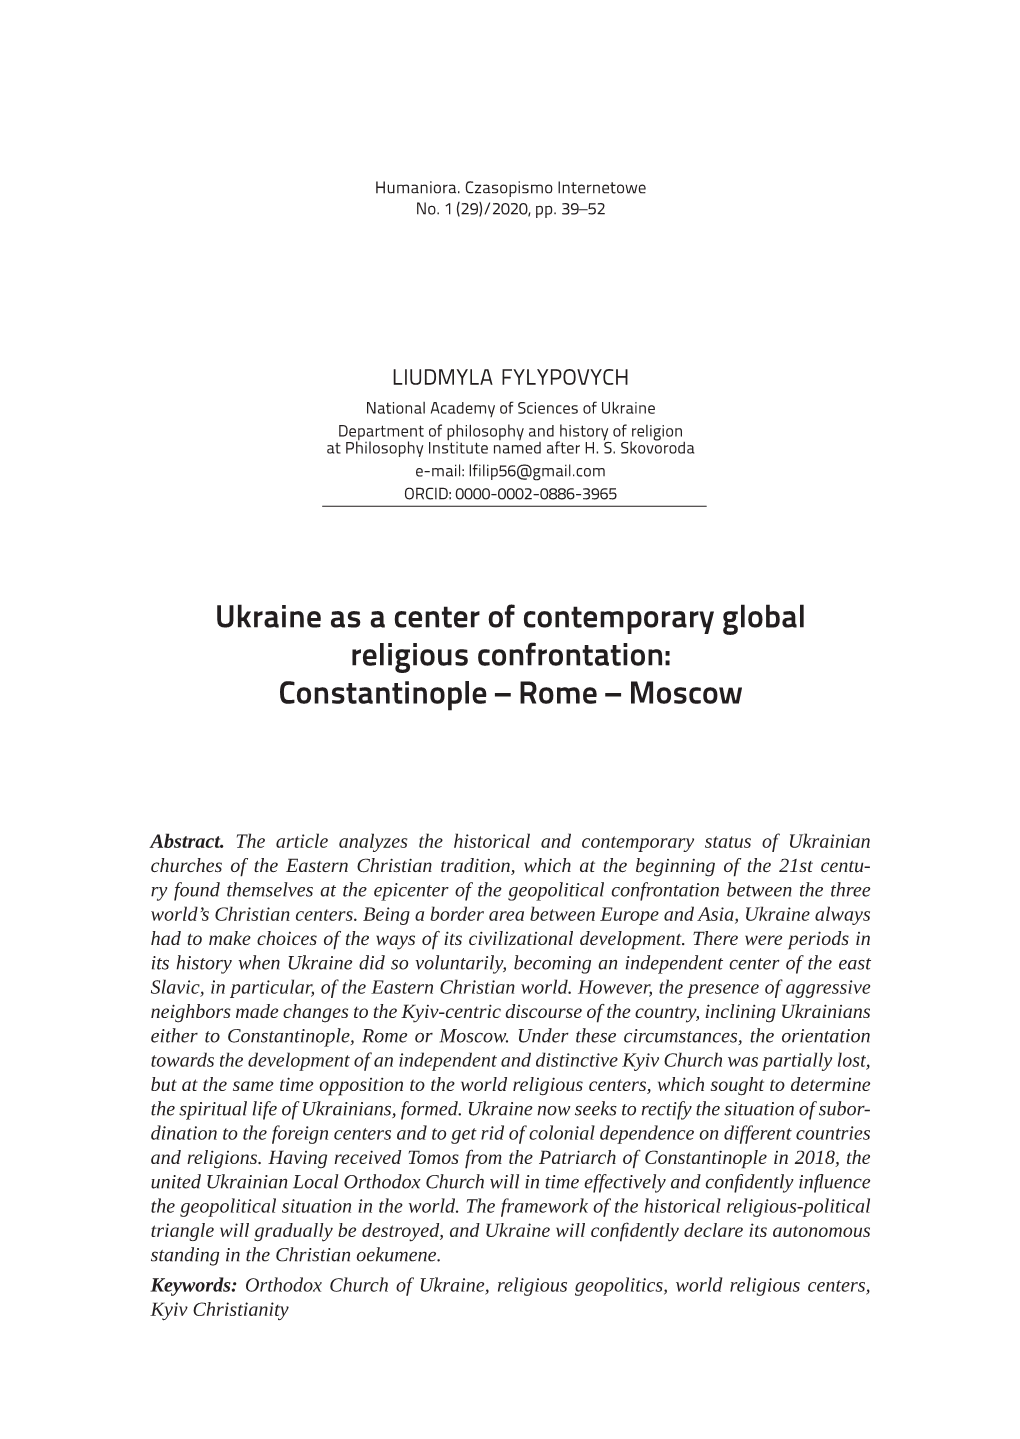 Ukraine As a Center of Contemporary Global Religious Confrontation: Constantinople – Rome – Moscow